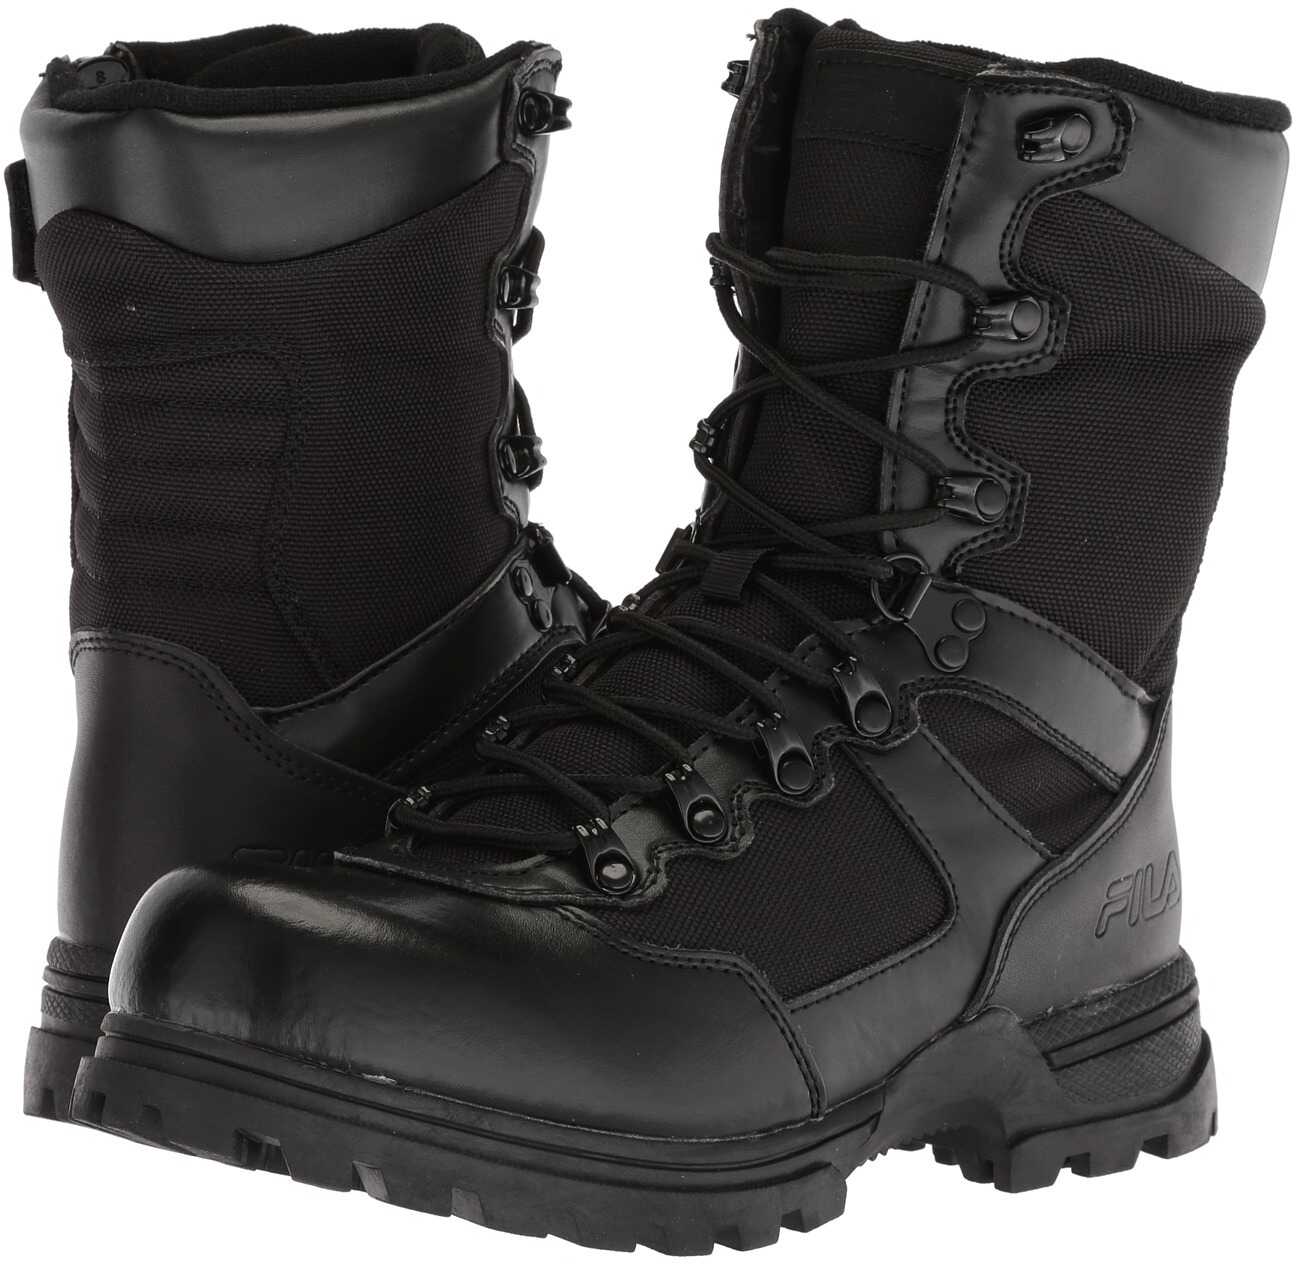 Fila Stormer Work Boots Black/Black/Black